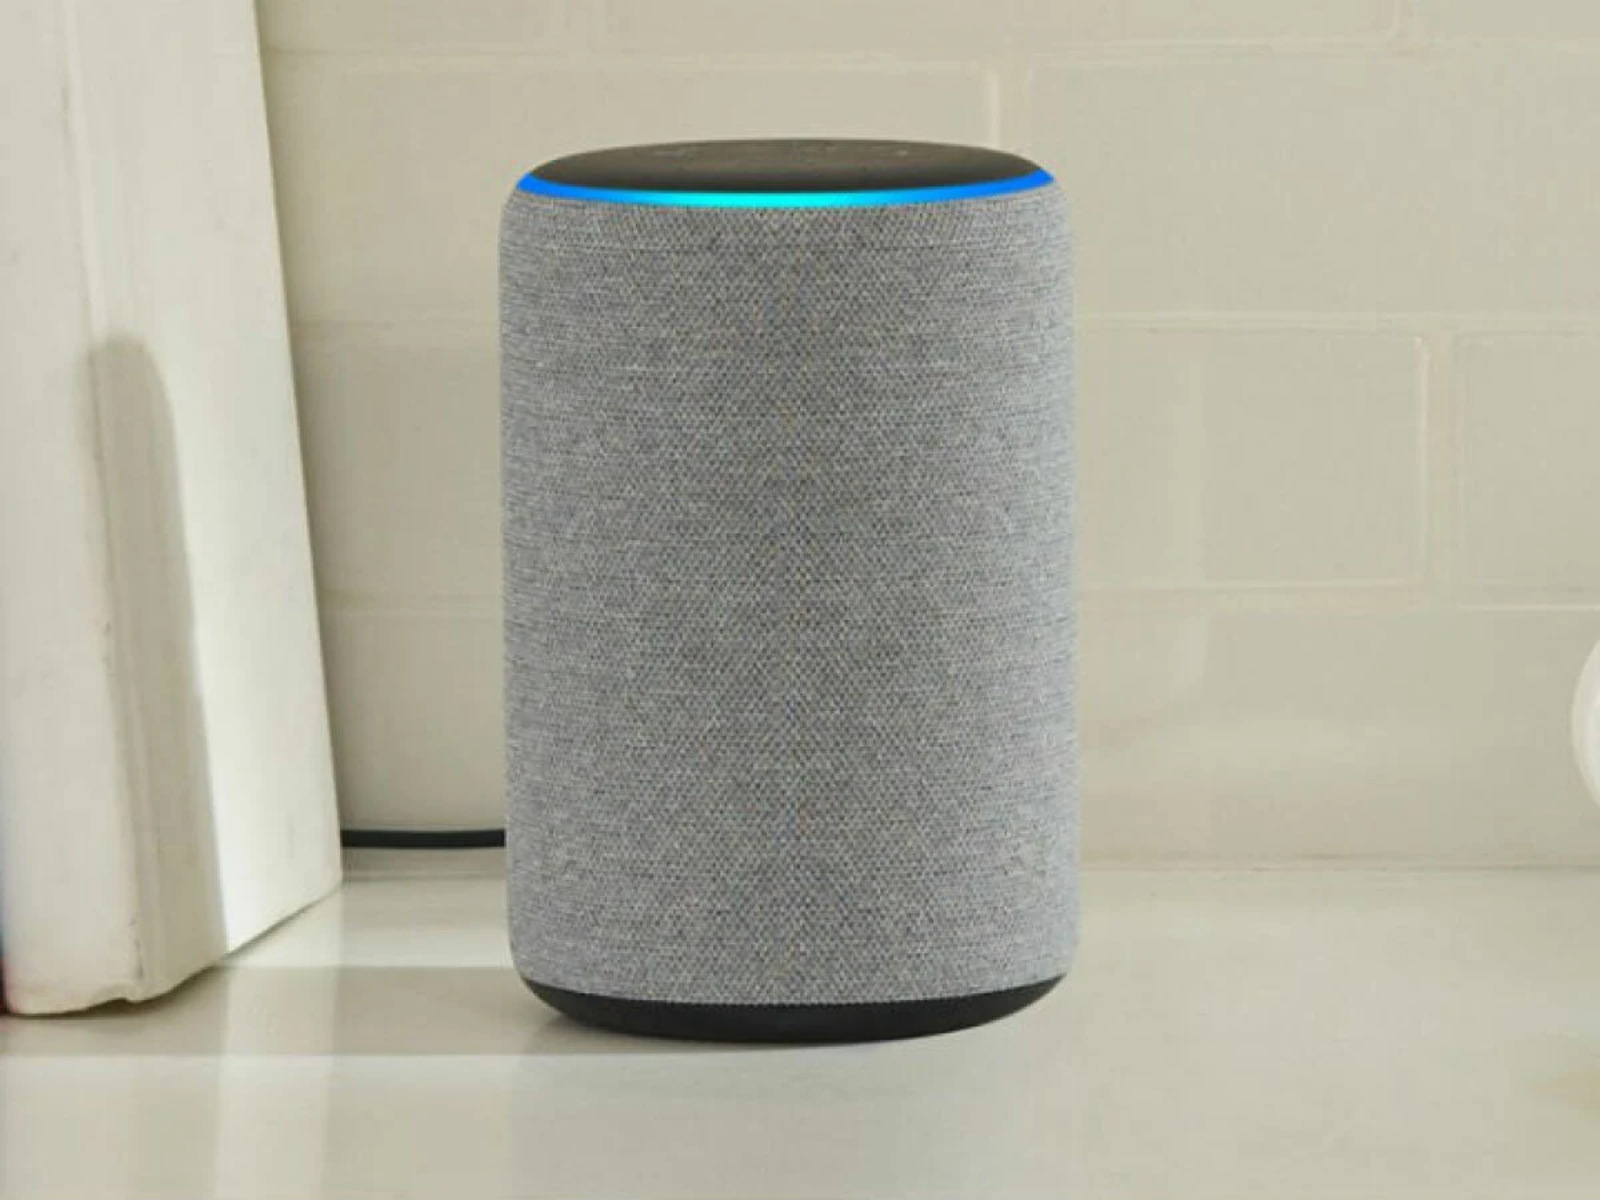 How To Play Amazon Music Offline On Smart Speaker